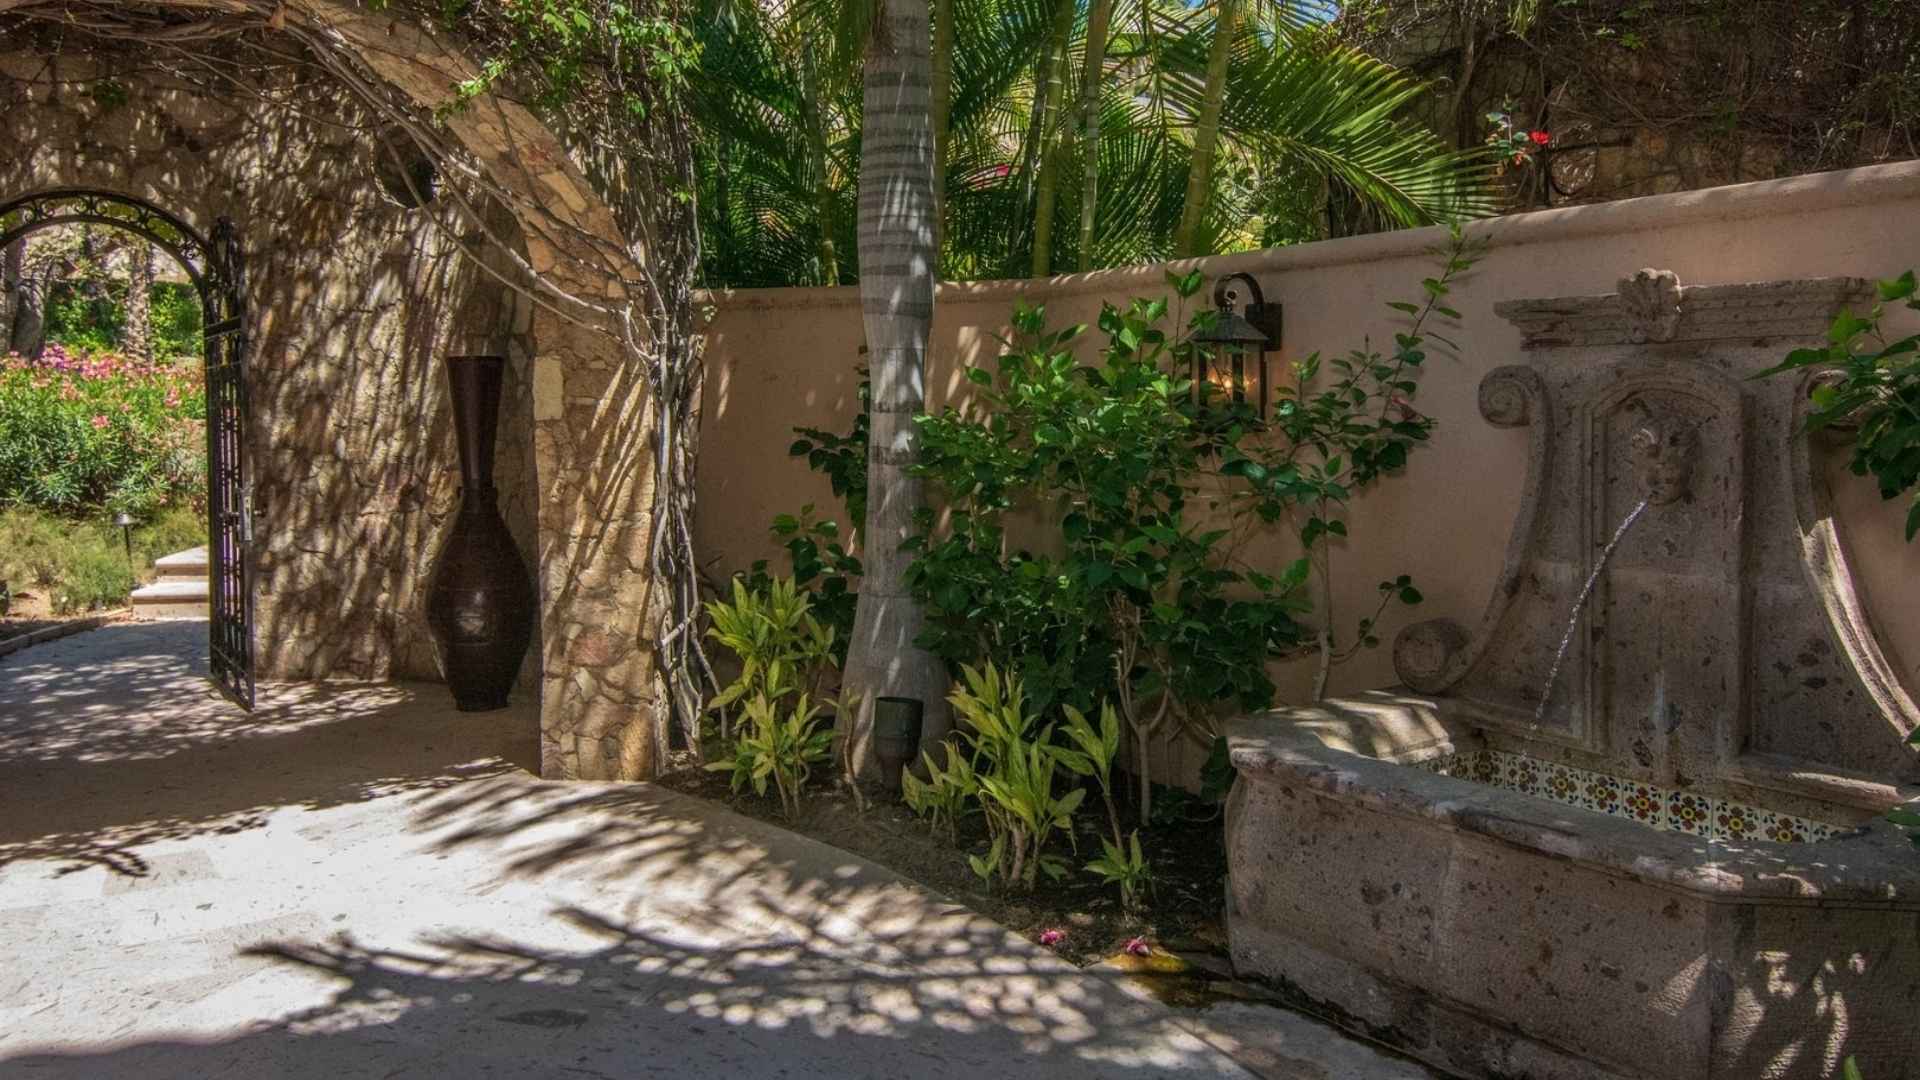 Villa 366 - San Jose del Cabo